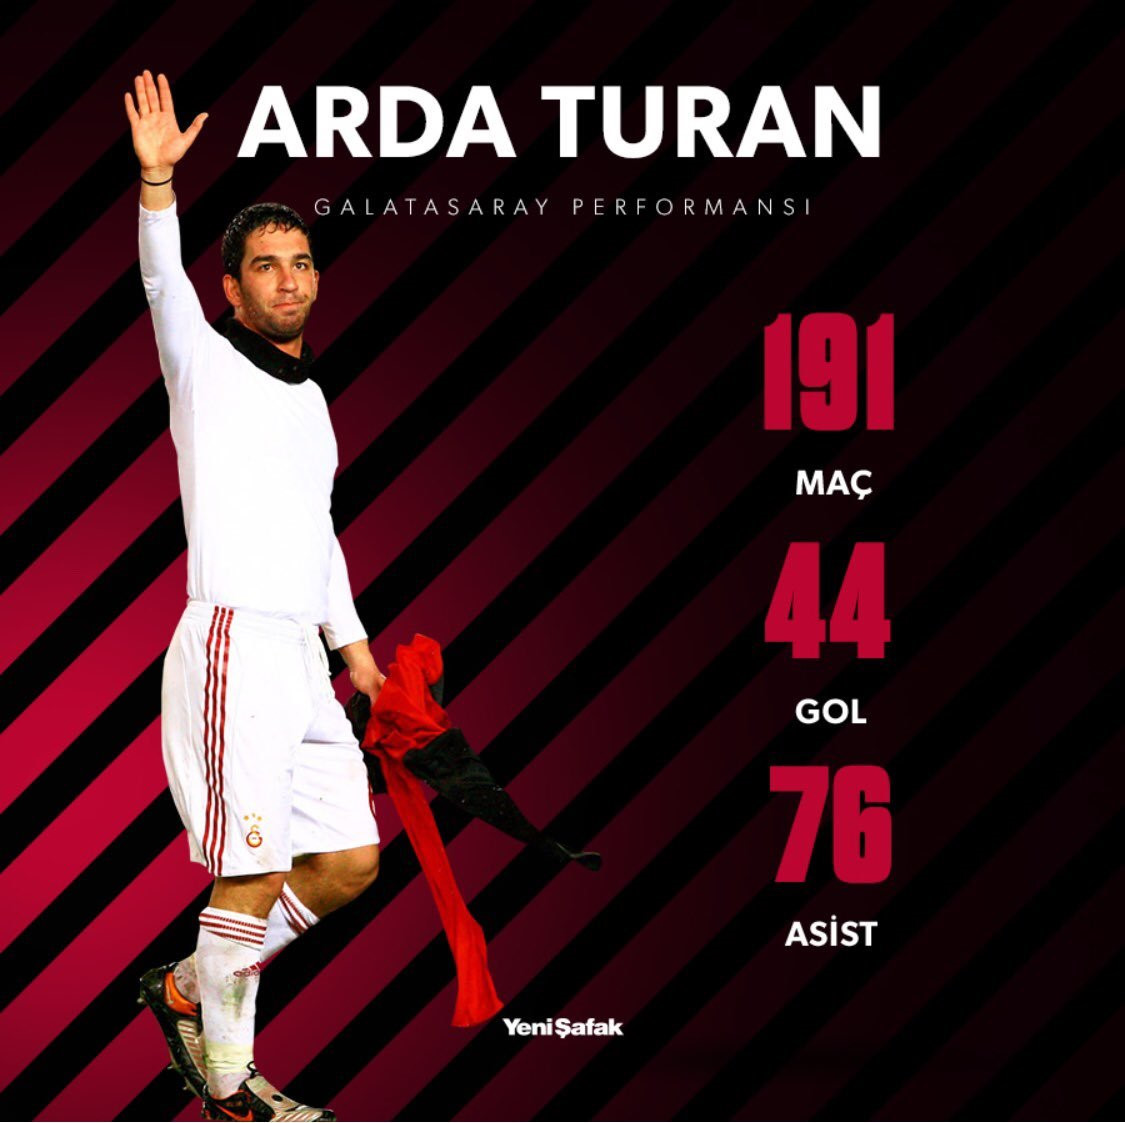 Galatasaray’a transferi konuşulan Arda Turan’ın sarı kırmızılılardaki performansı